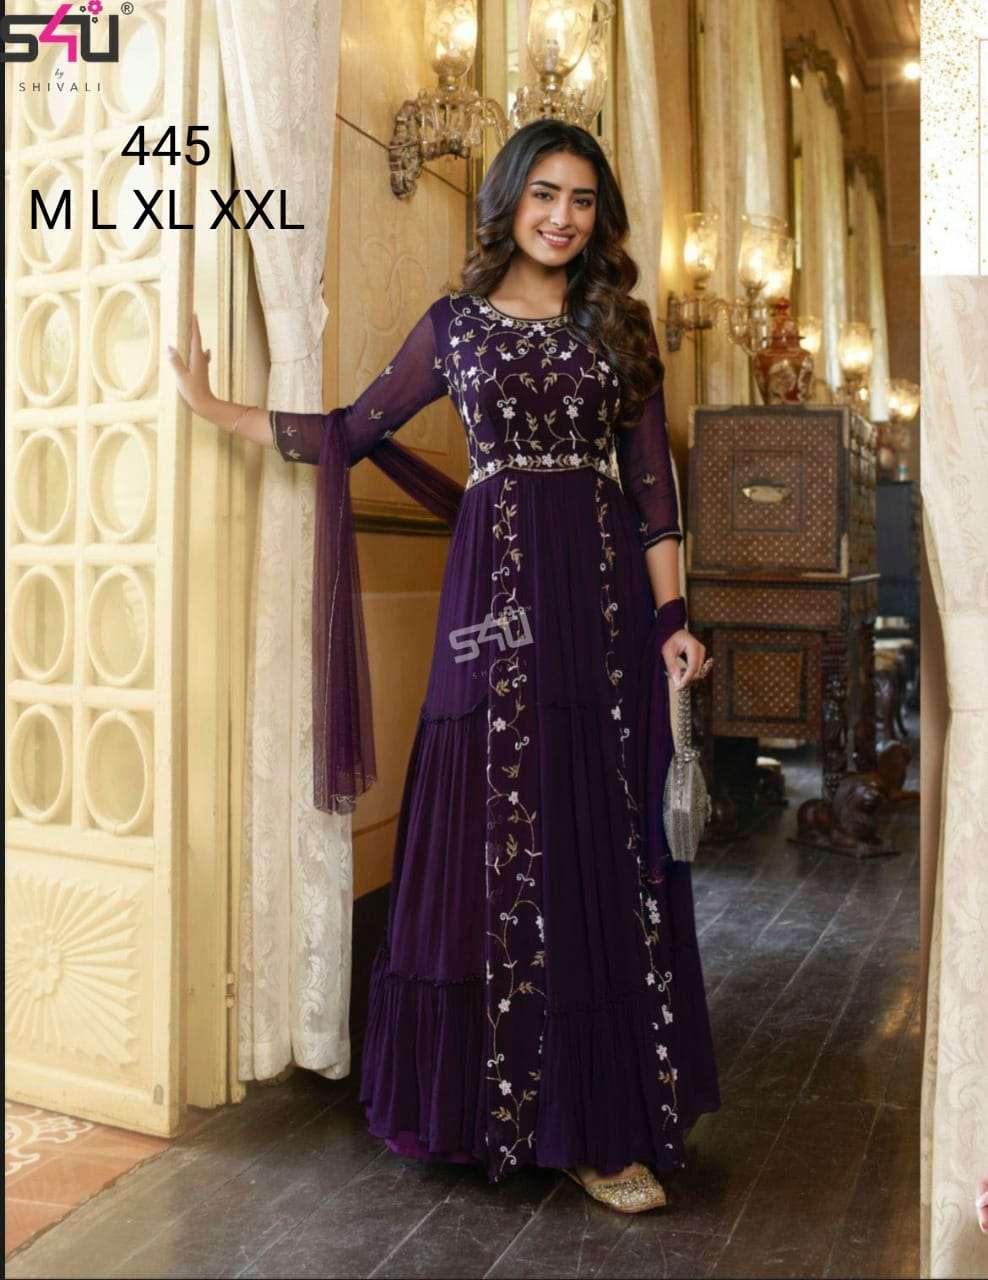 shivali s4u design no 445 designer party wear kurti collection wholesale seller surat 